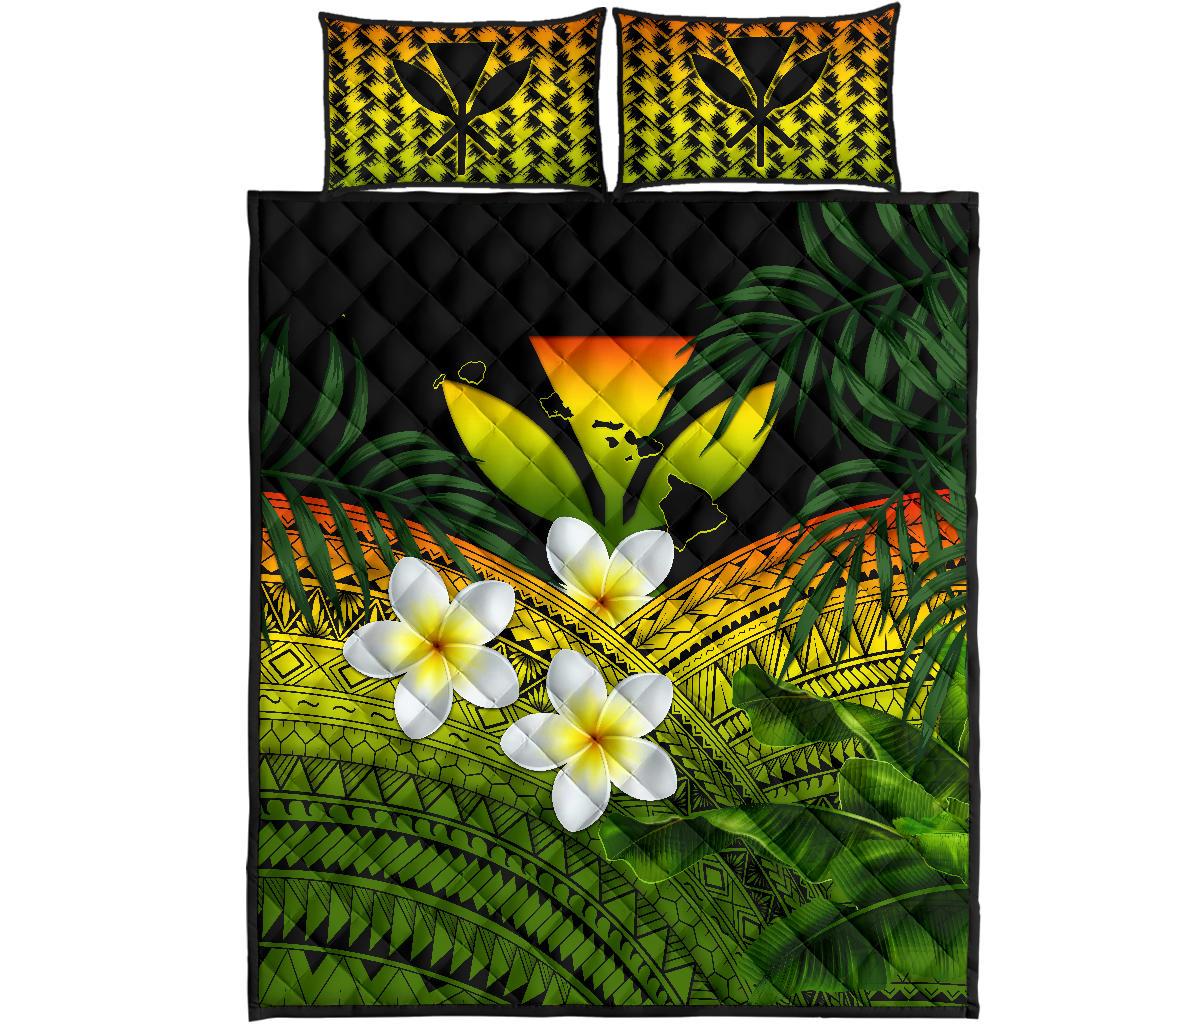 Kanaka Maoli (Hawaiian) Quilt Bed Set, Polynesian Plumeria Banana Leaves Reggae Reggae - Polynesian Pride